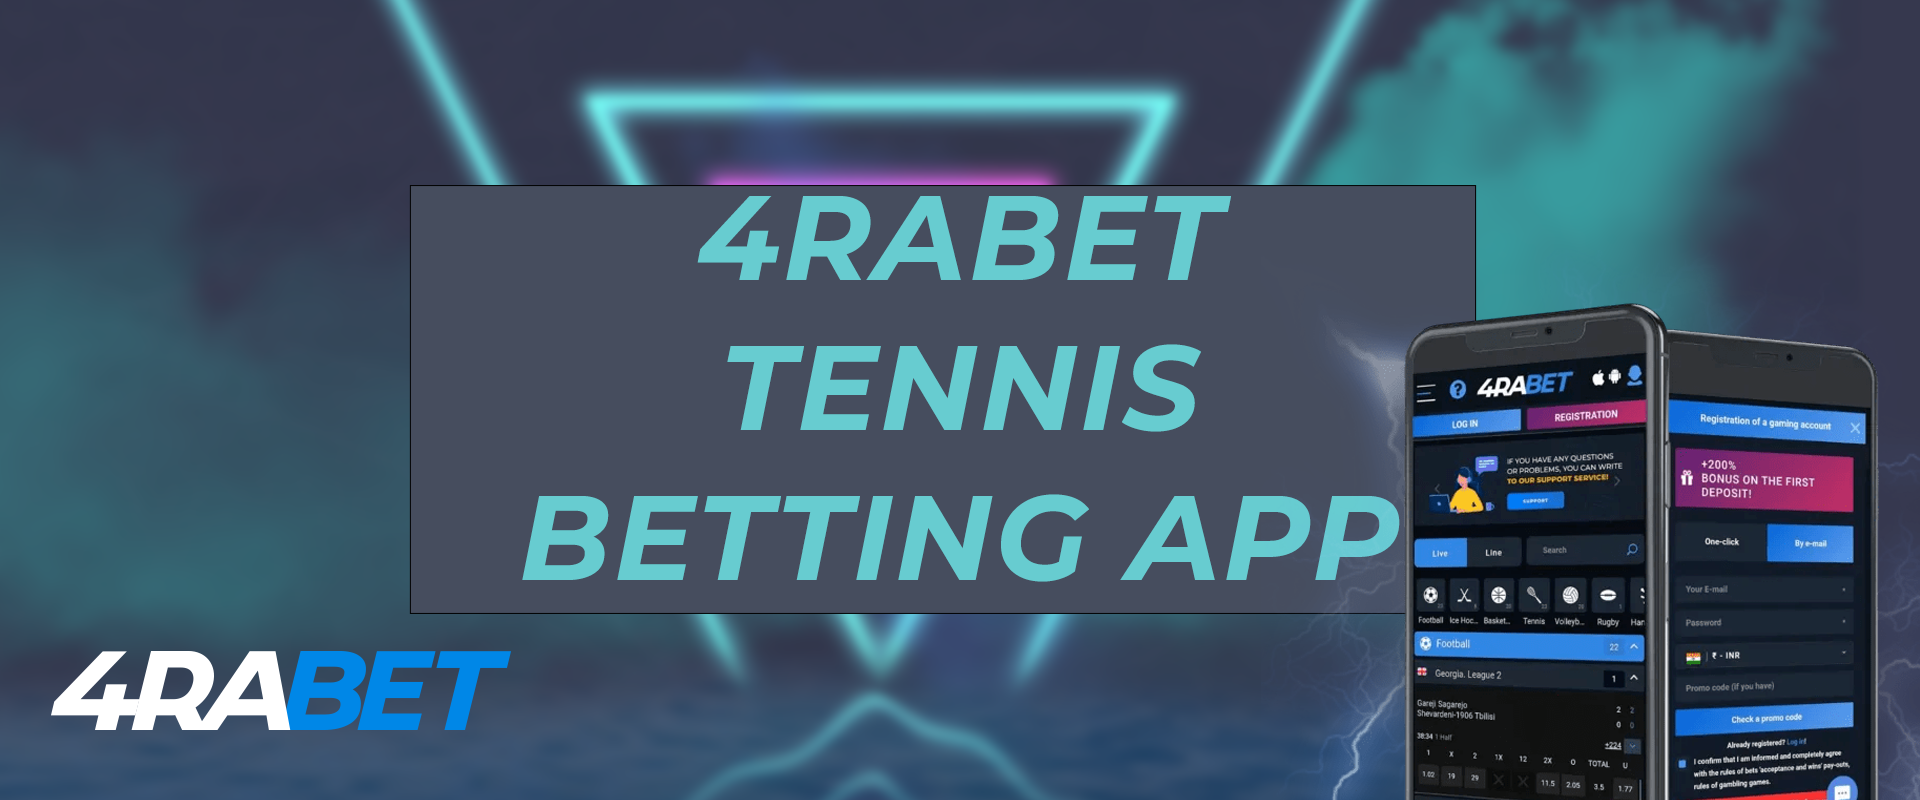 4rabet mobile app for tennis betting.